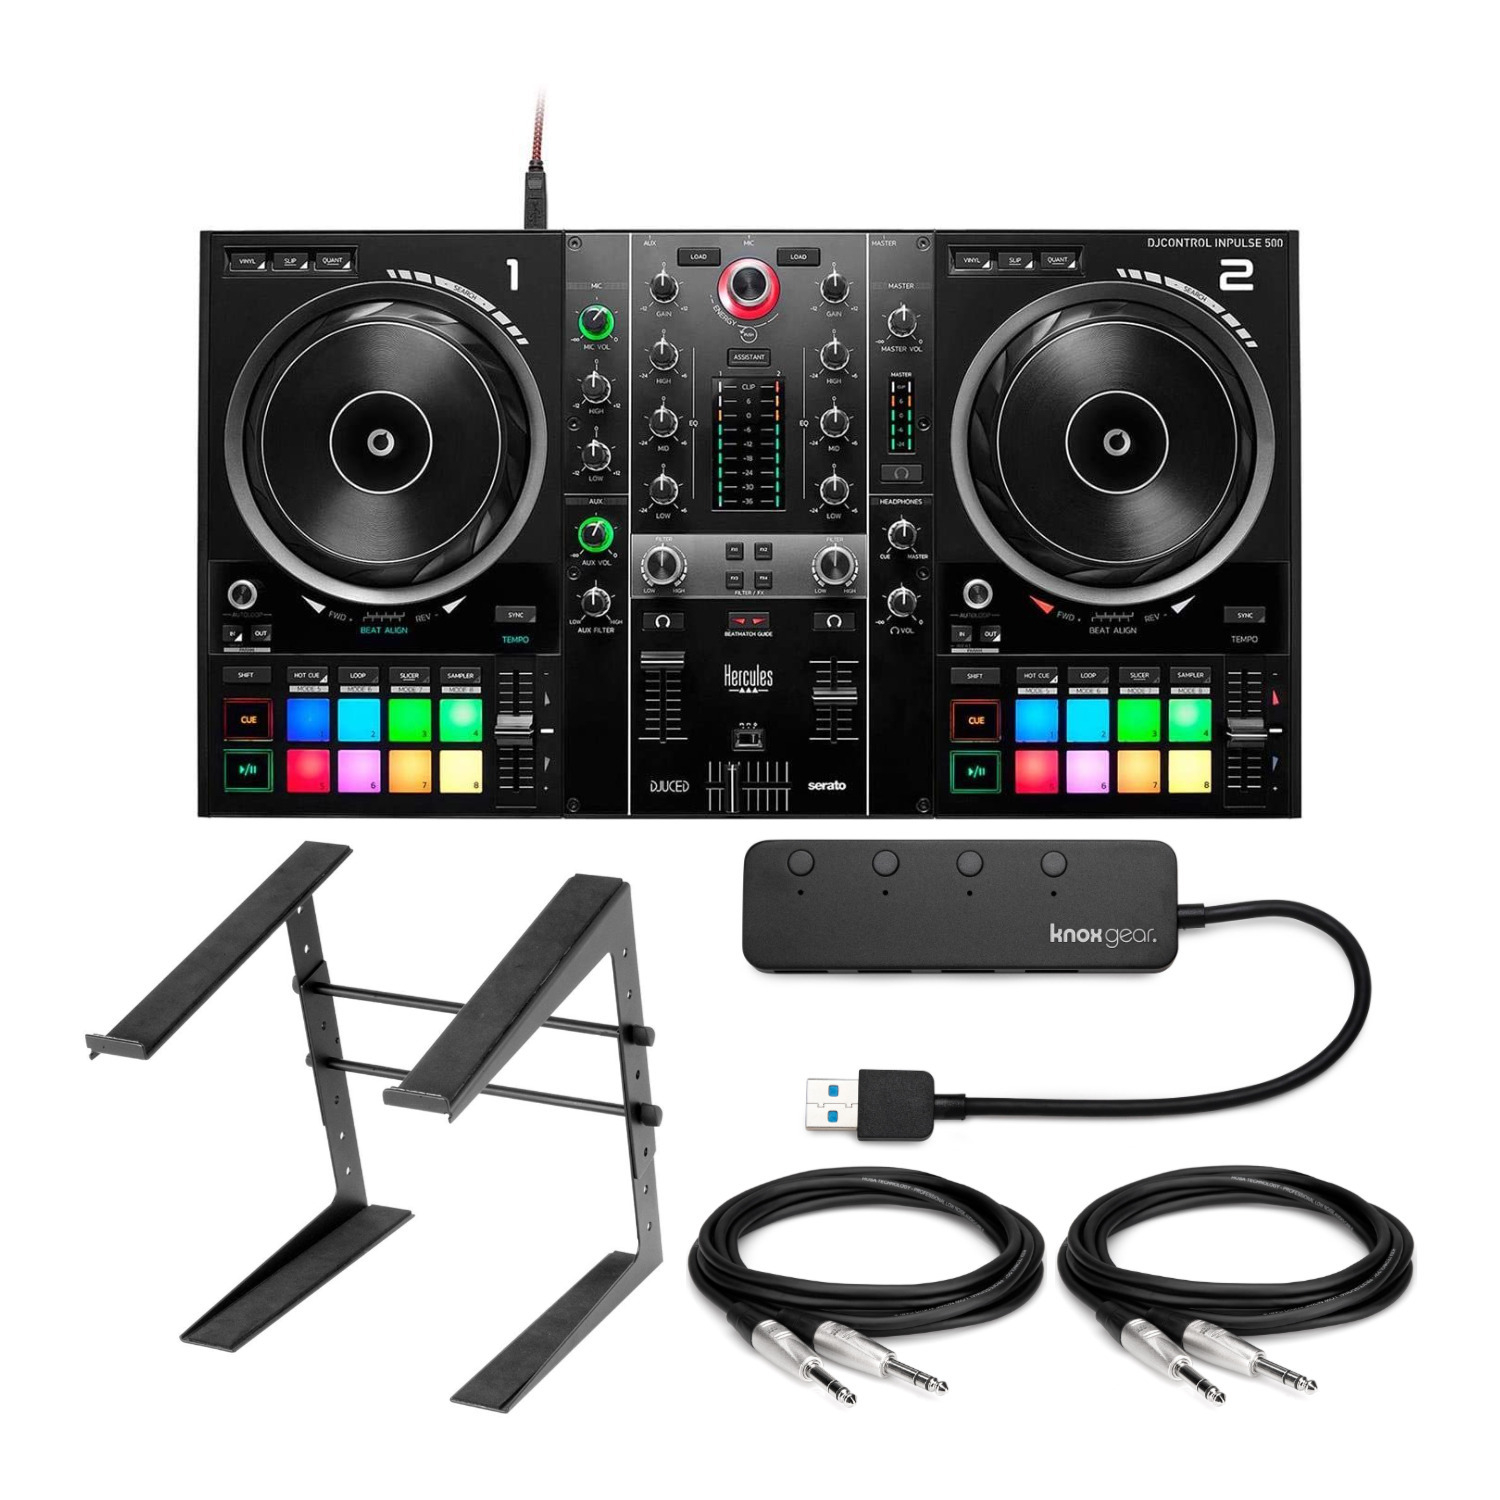 Hercules DJControl Inpulse 500 2-Deck DJ Controller with Stand and Knox Gear 4-Port USB Hub Bundle in Black -  AMS-DJC-INPULSE-500